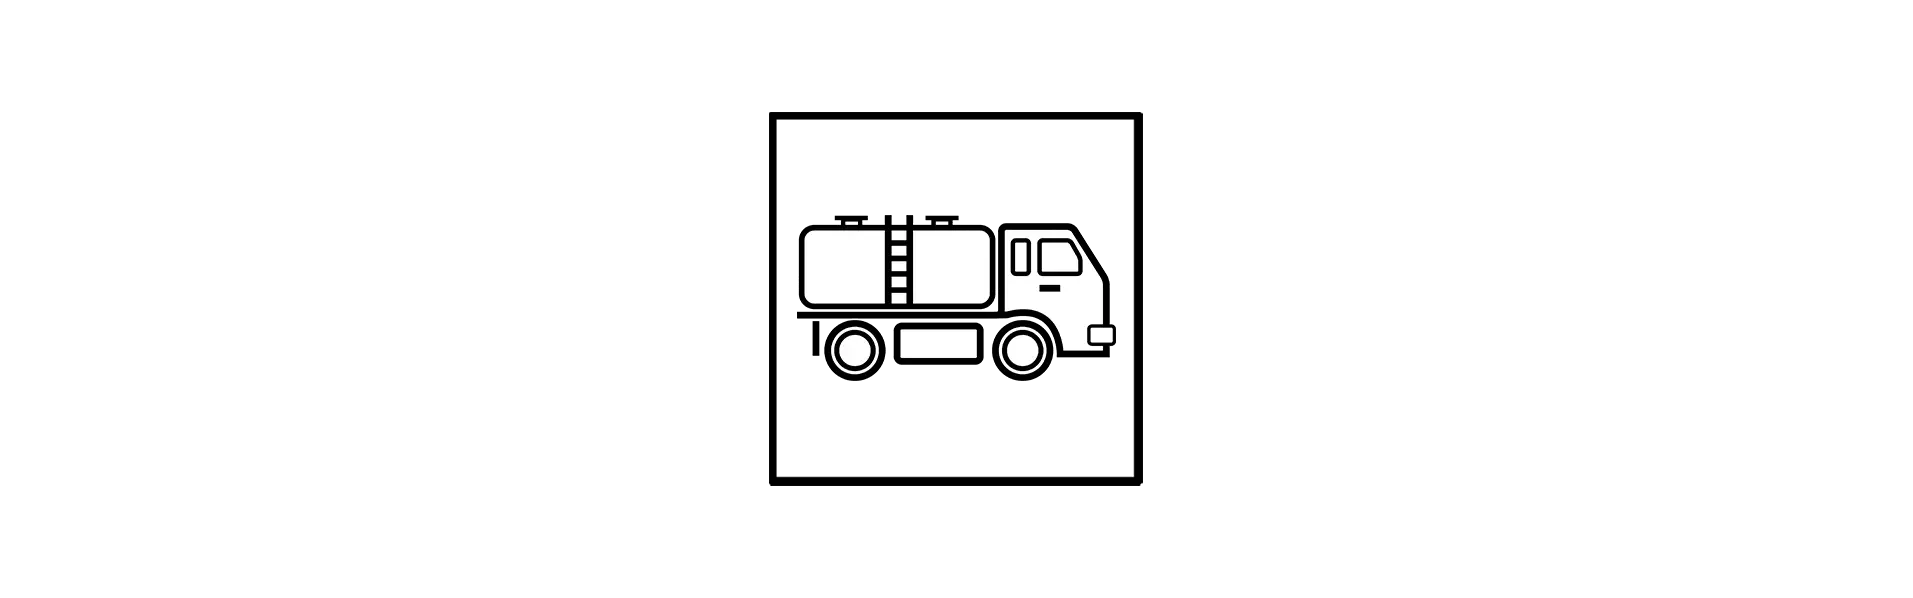 Mobile-fleet-fuel-delivery-management-public-works